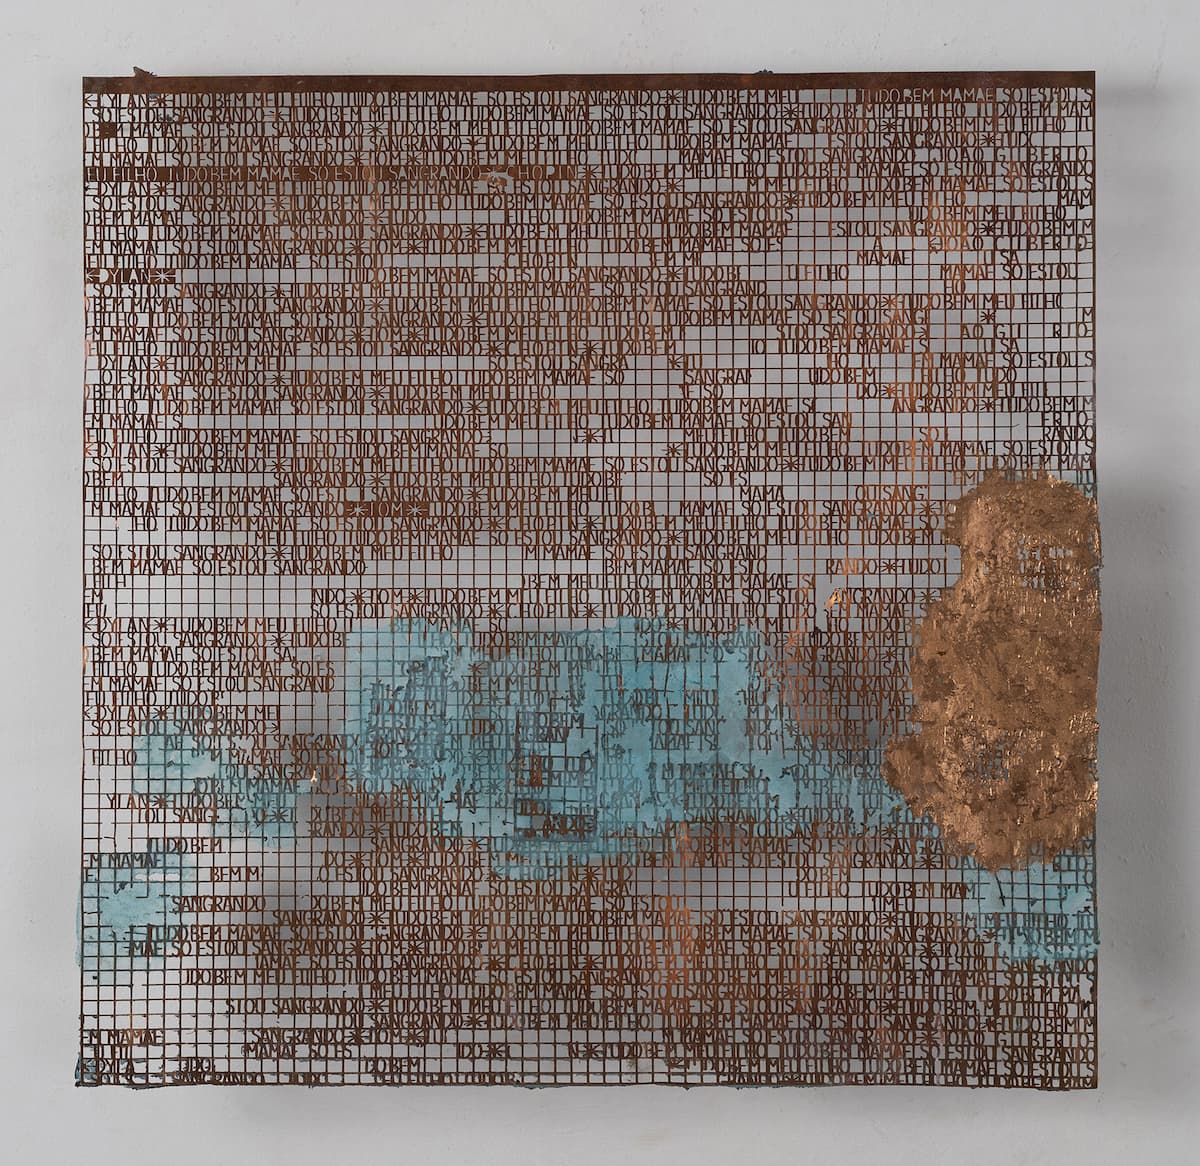 Hilal Sami Hilal, 2020, Untitled, series alright, copper/corrosion and handmade paper, 58 x 58 cm. Photo: Bruno Coelho.